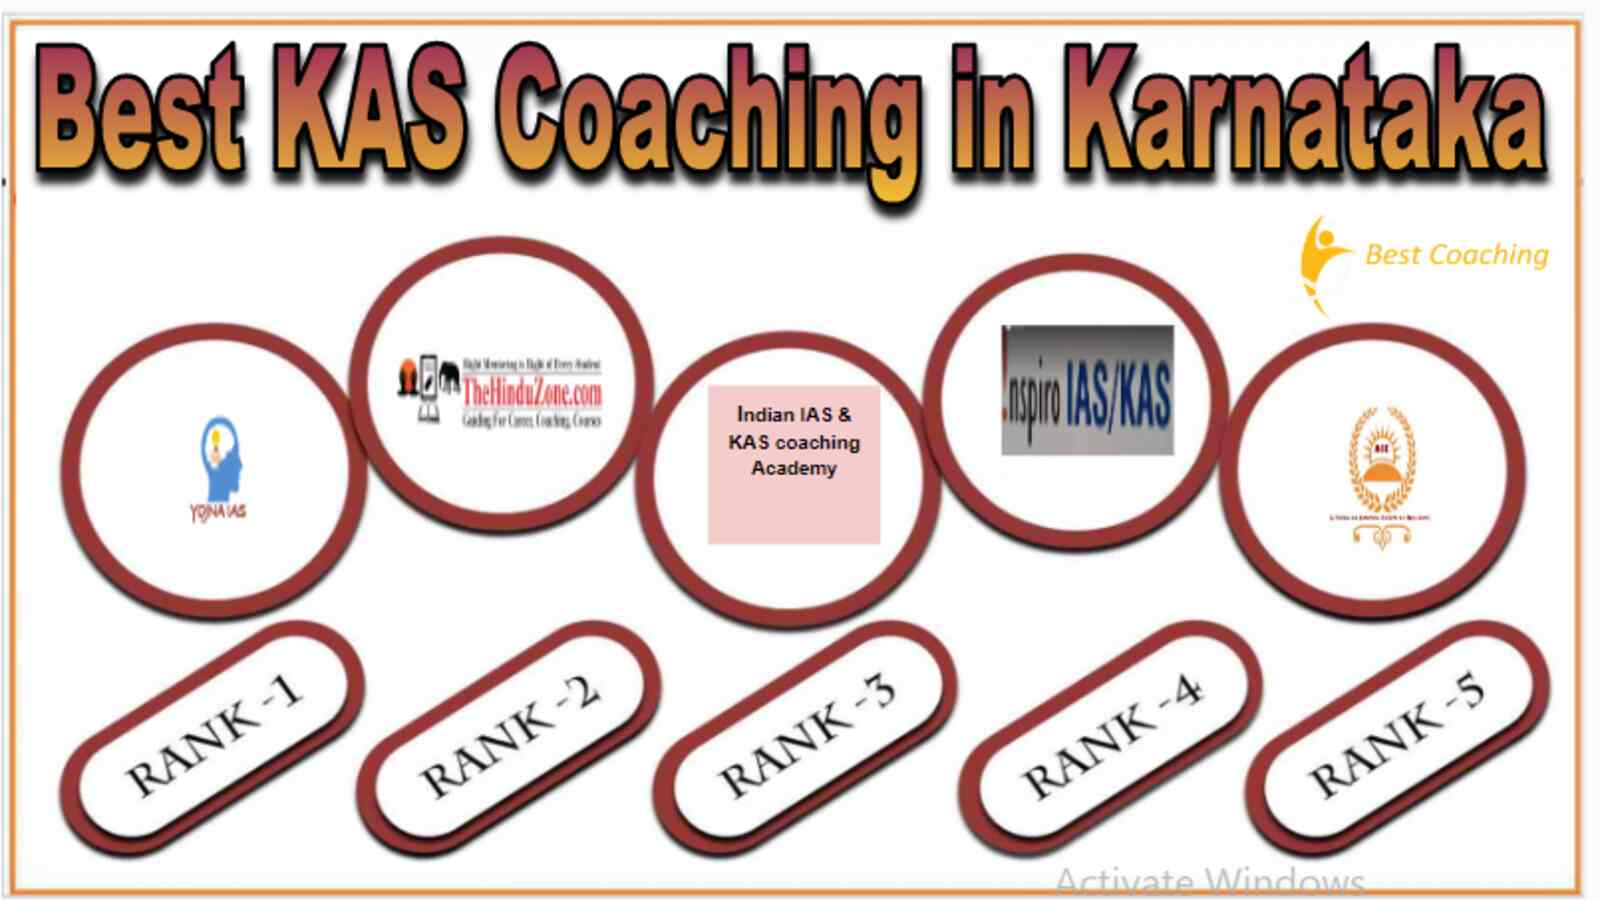 Best KAS Coaching in Karnataka